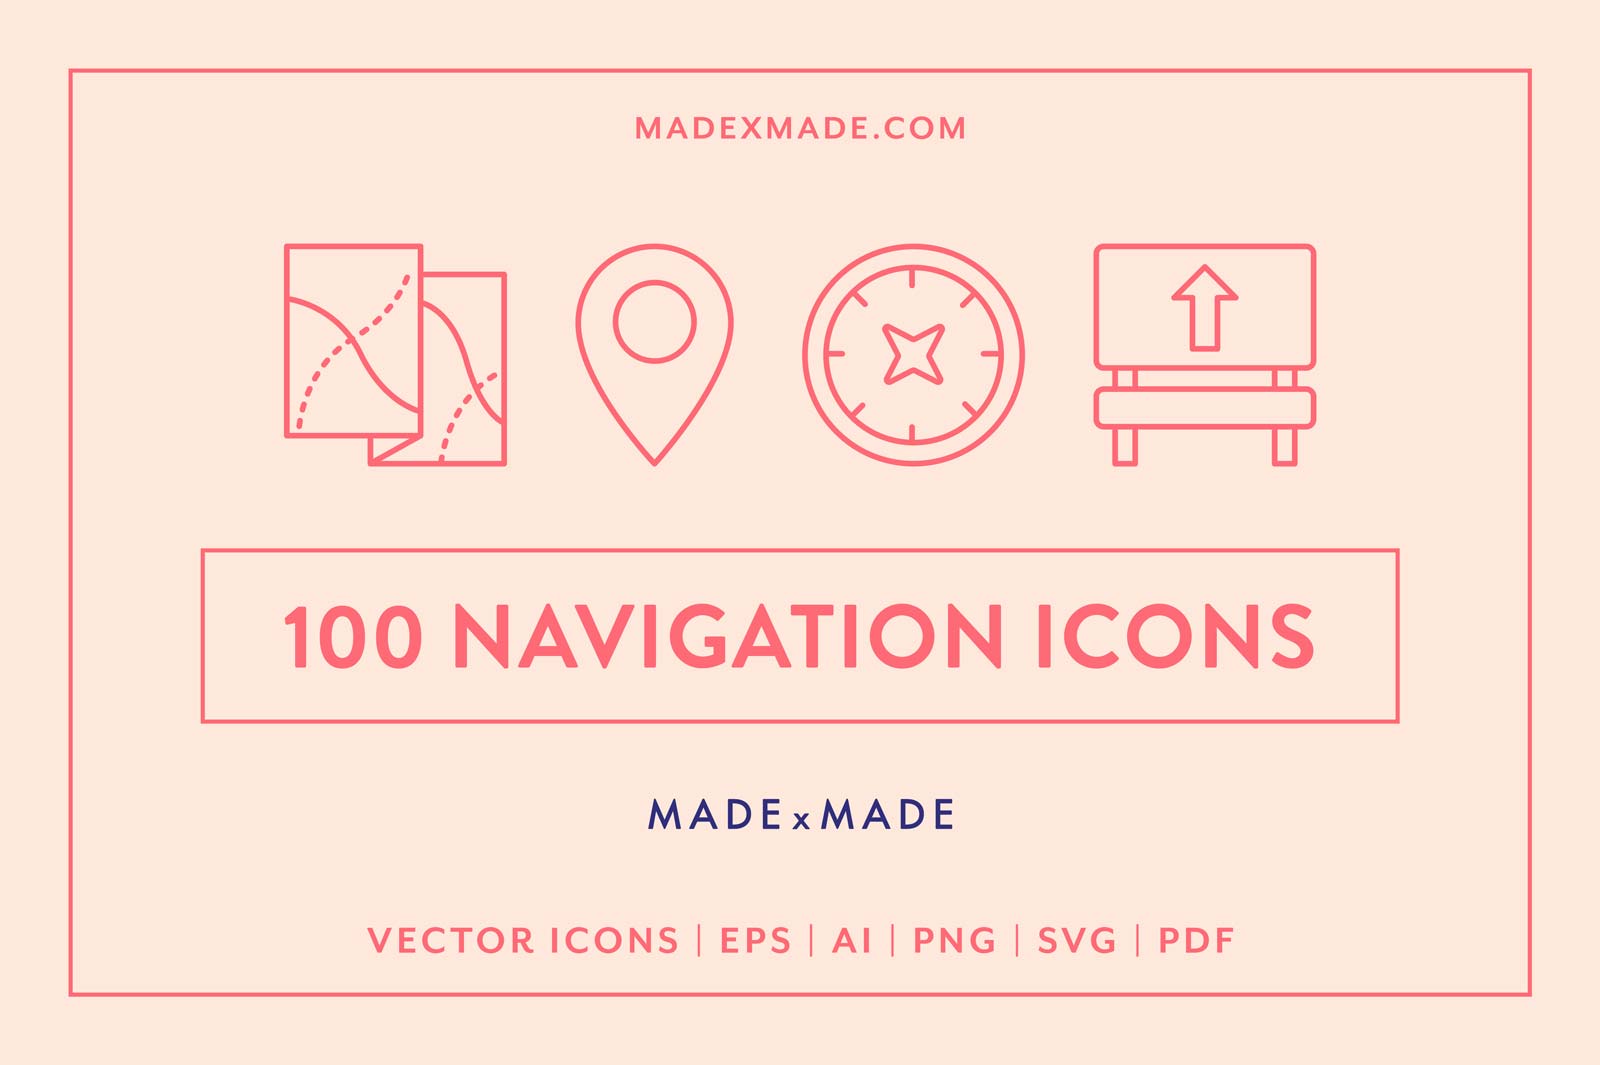 made x made icons navigation